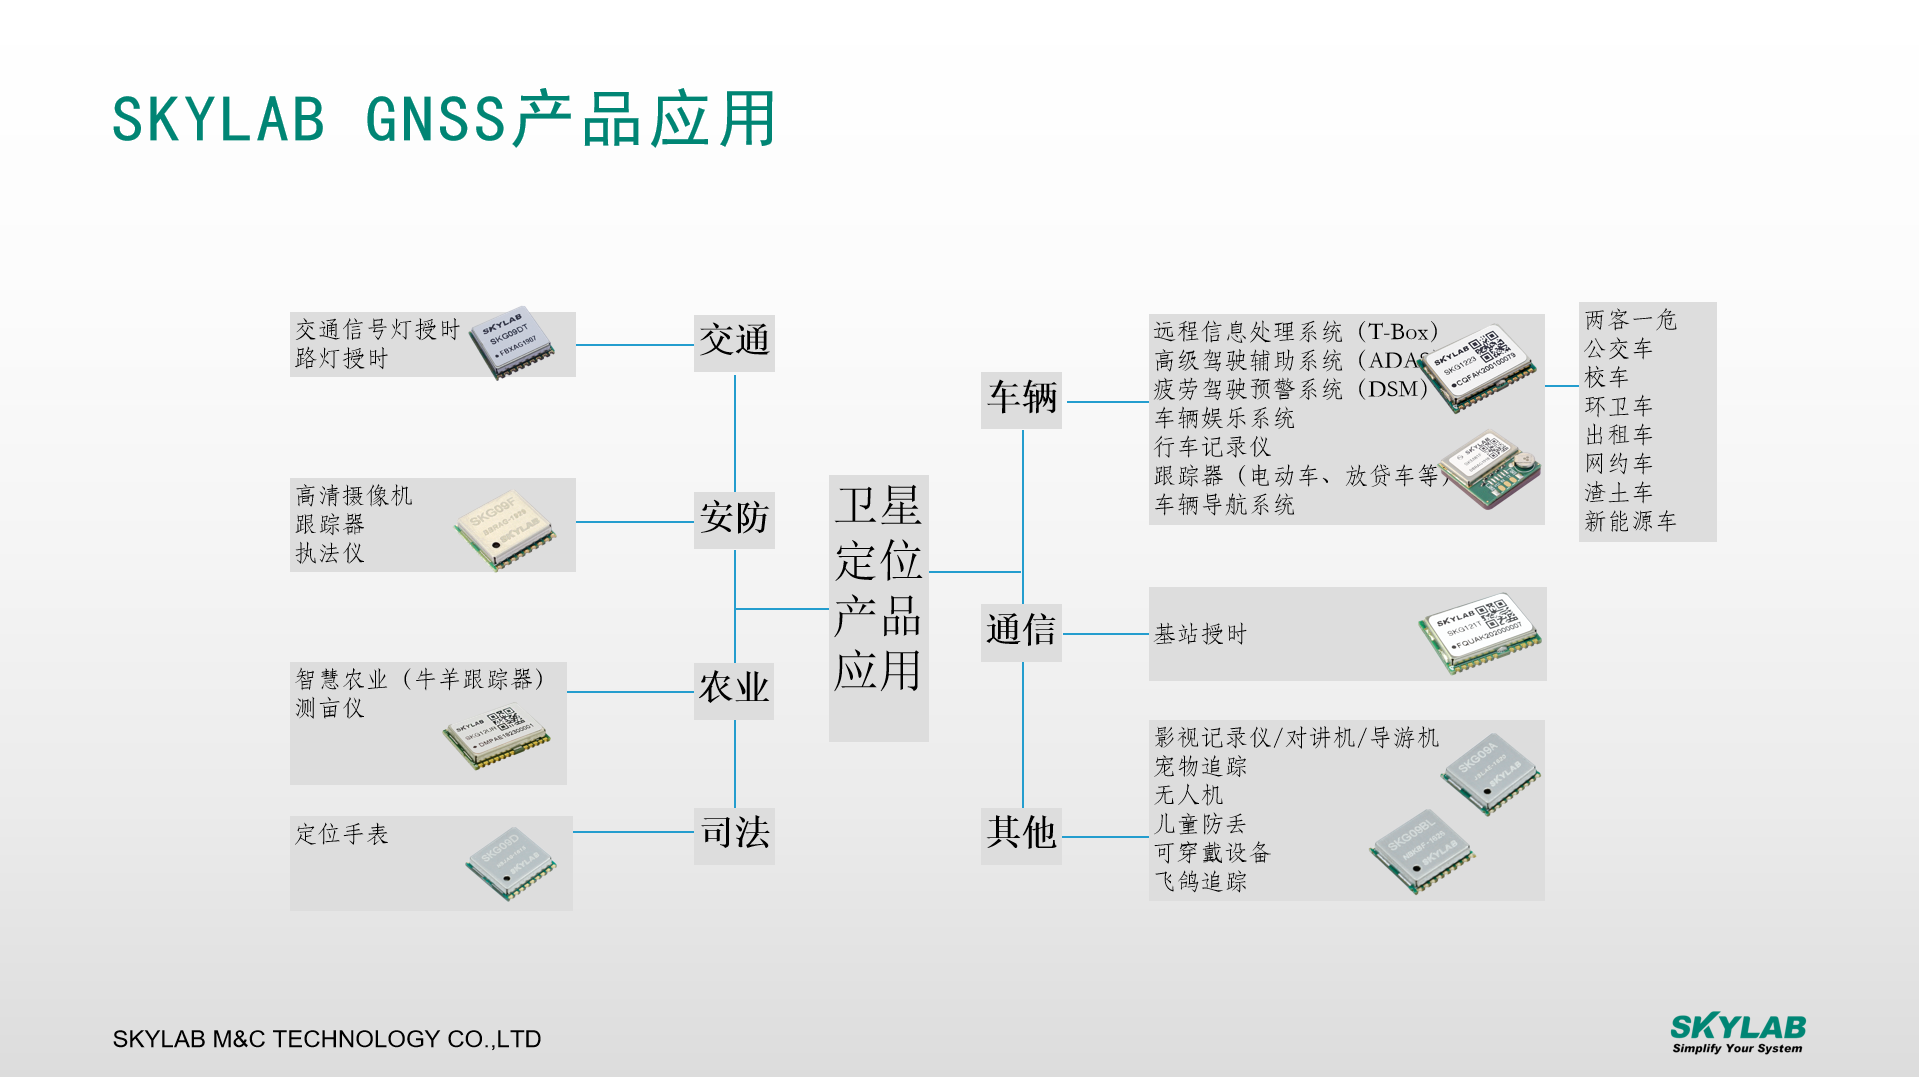 SKYLAB GNSS模块产品应用